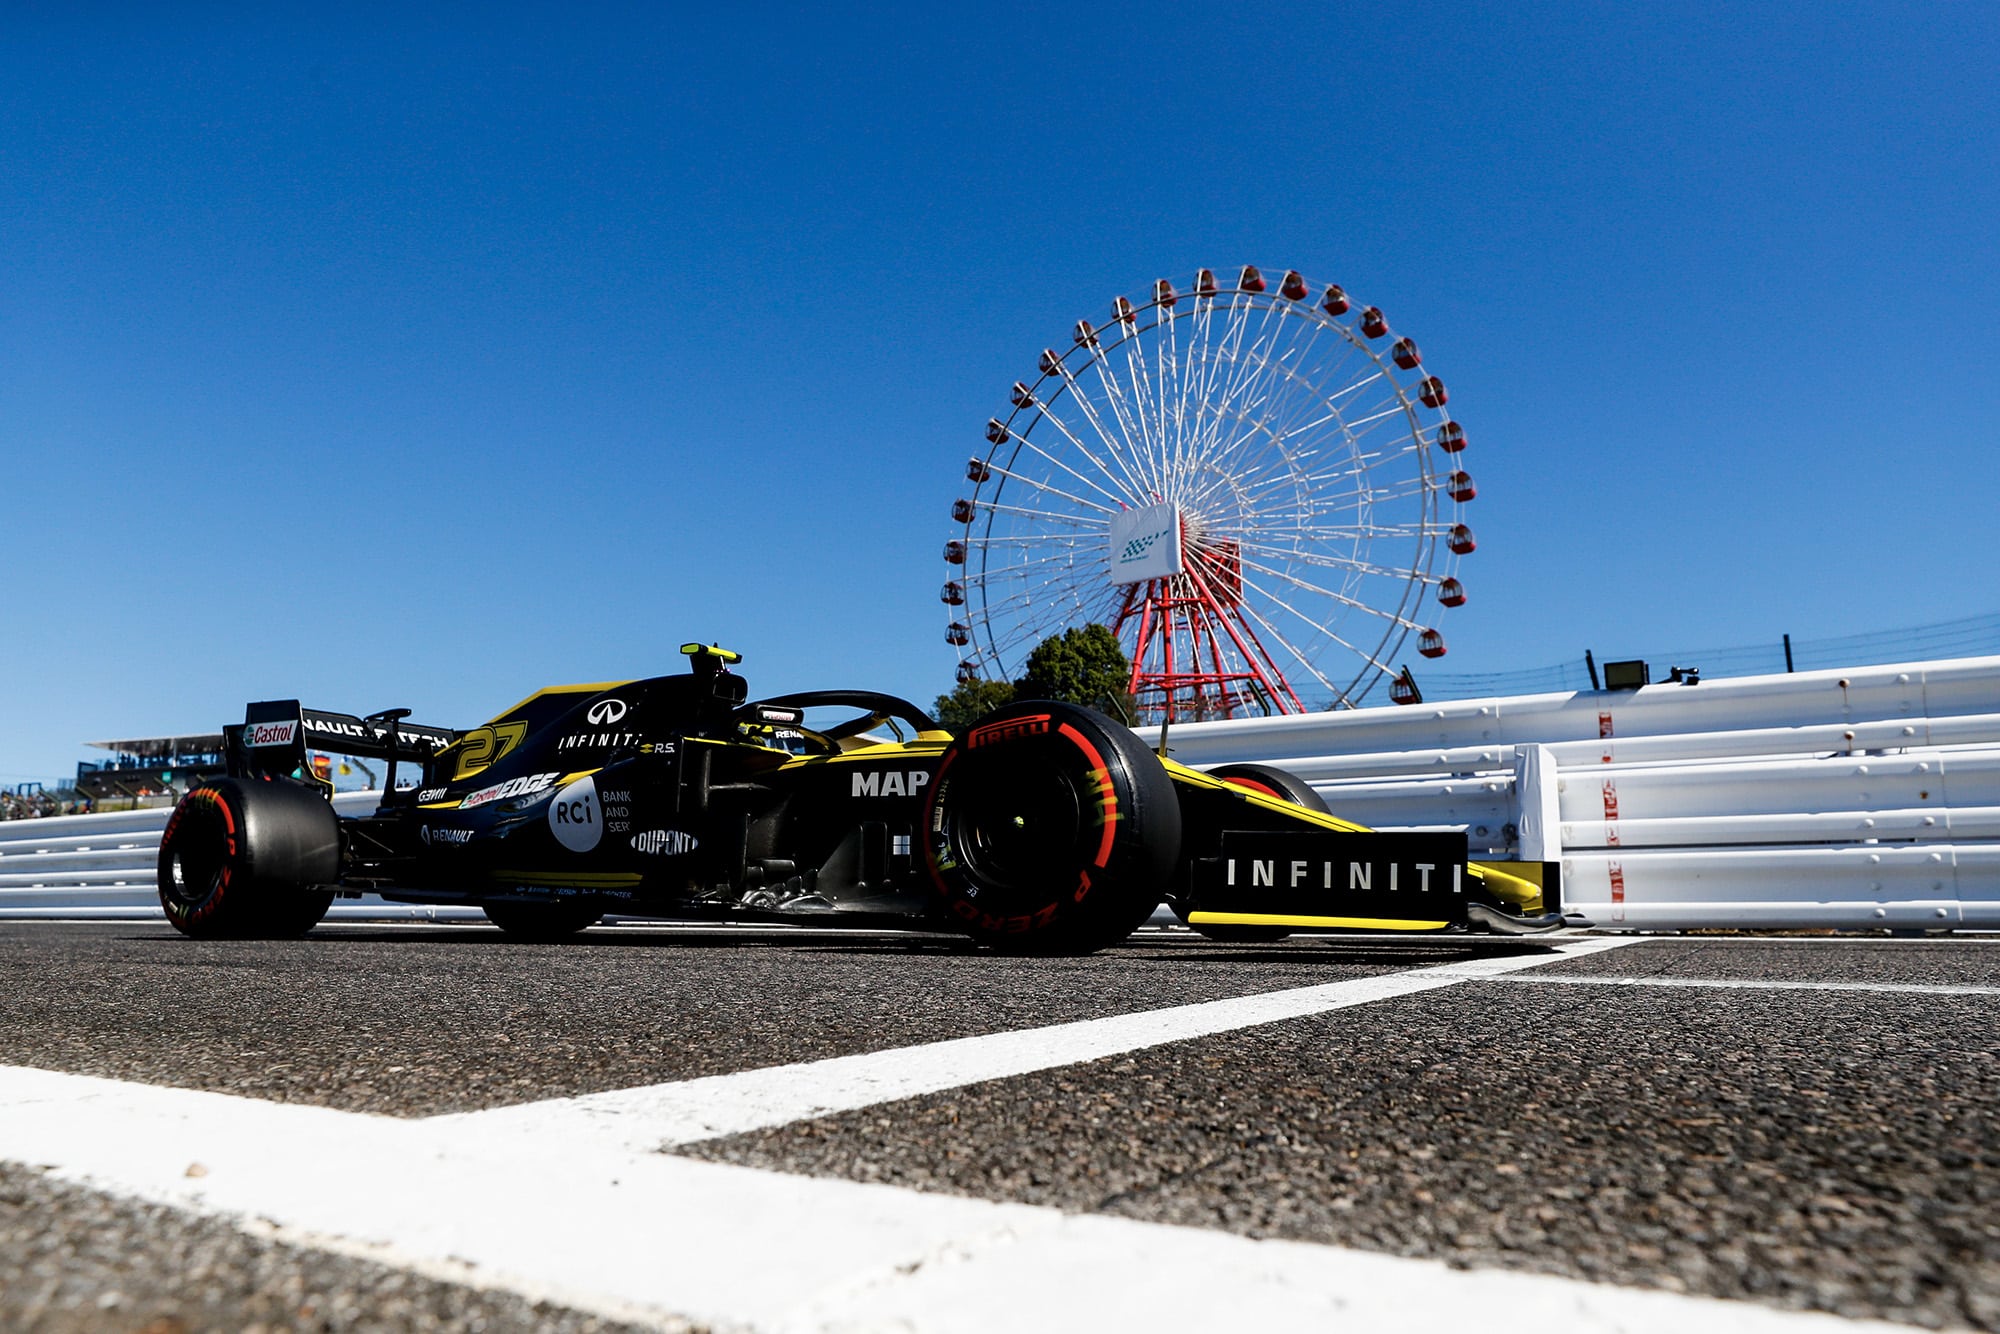 Nico Hulkenberg's Renault in front of Suzuka's big wheel at the 2019 Japanese Grand Prix